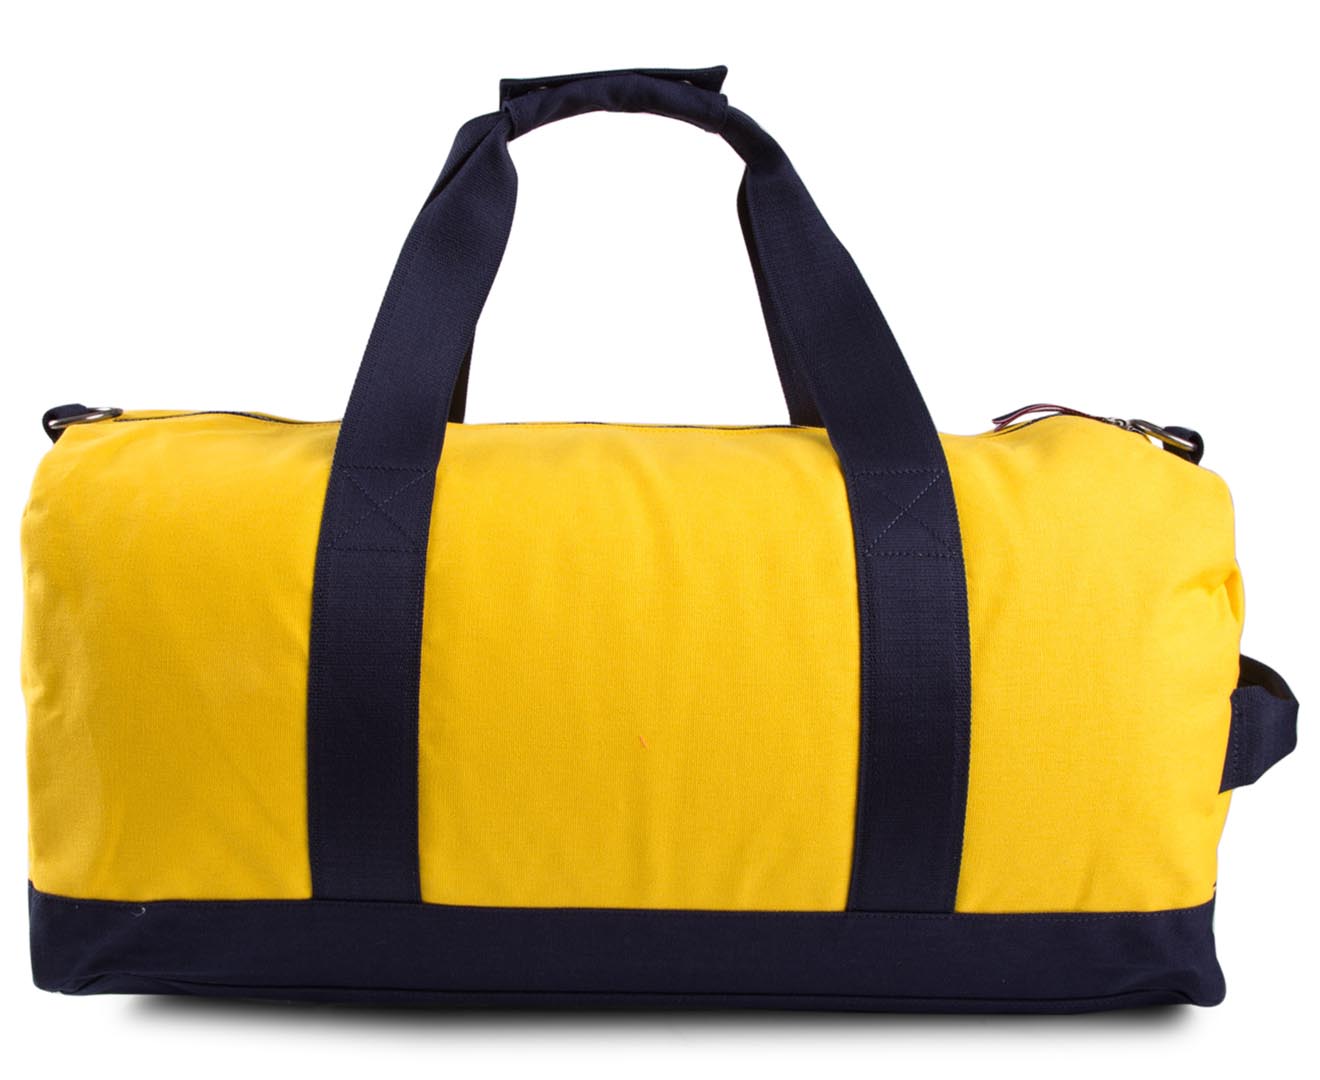 Tommy Hilfiger Sport Duffle Bag - Yellow/Navy | Catch.com.au